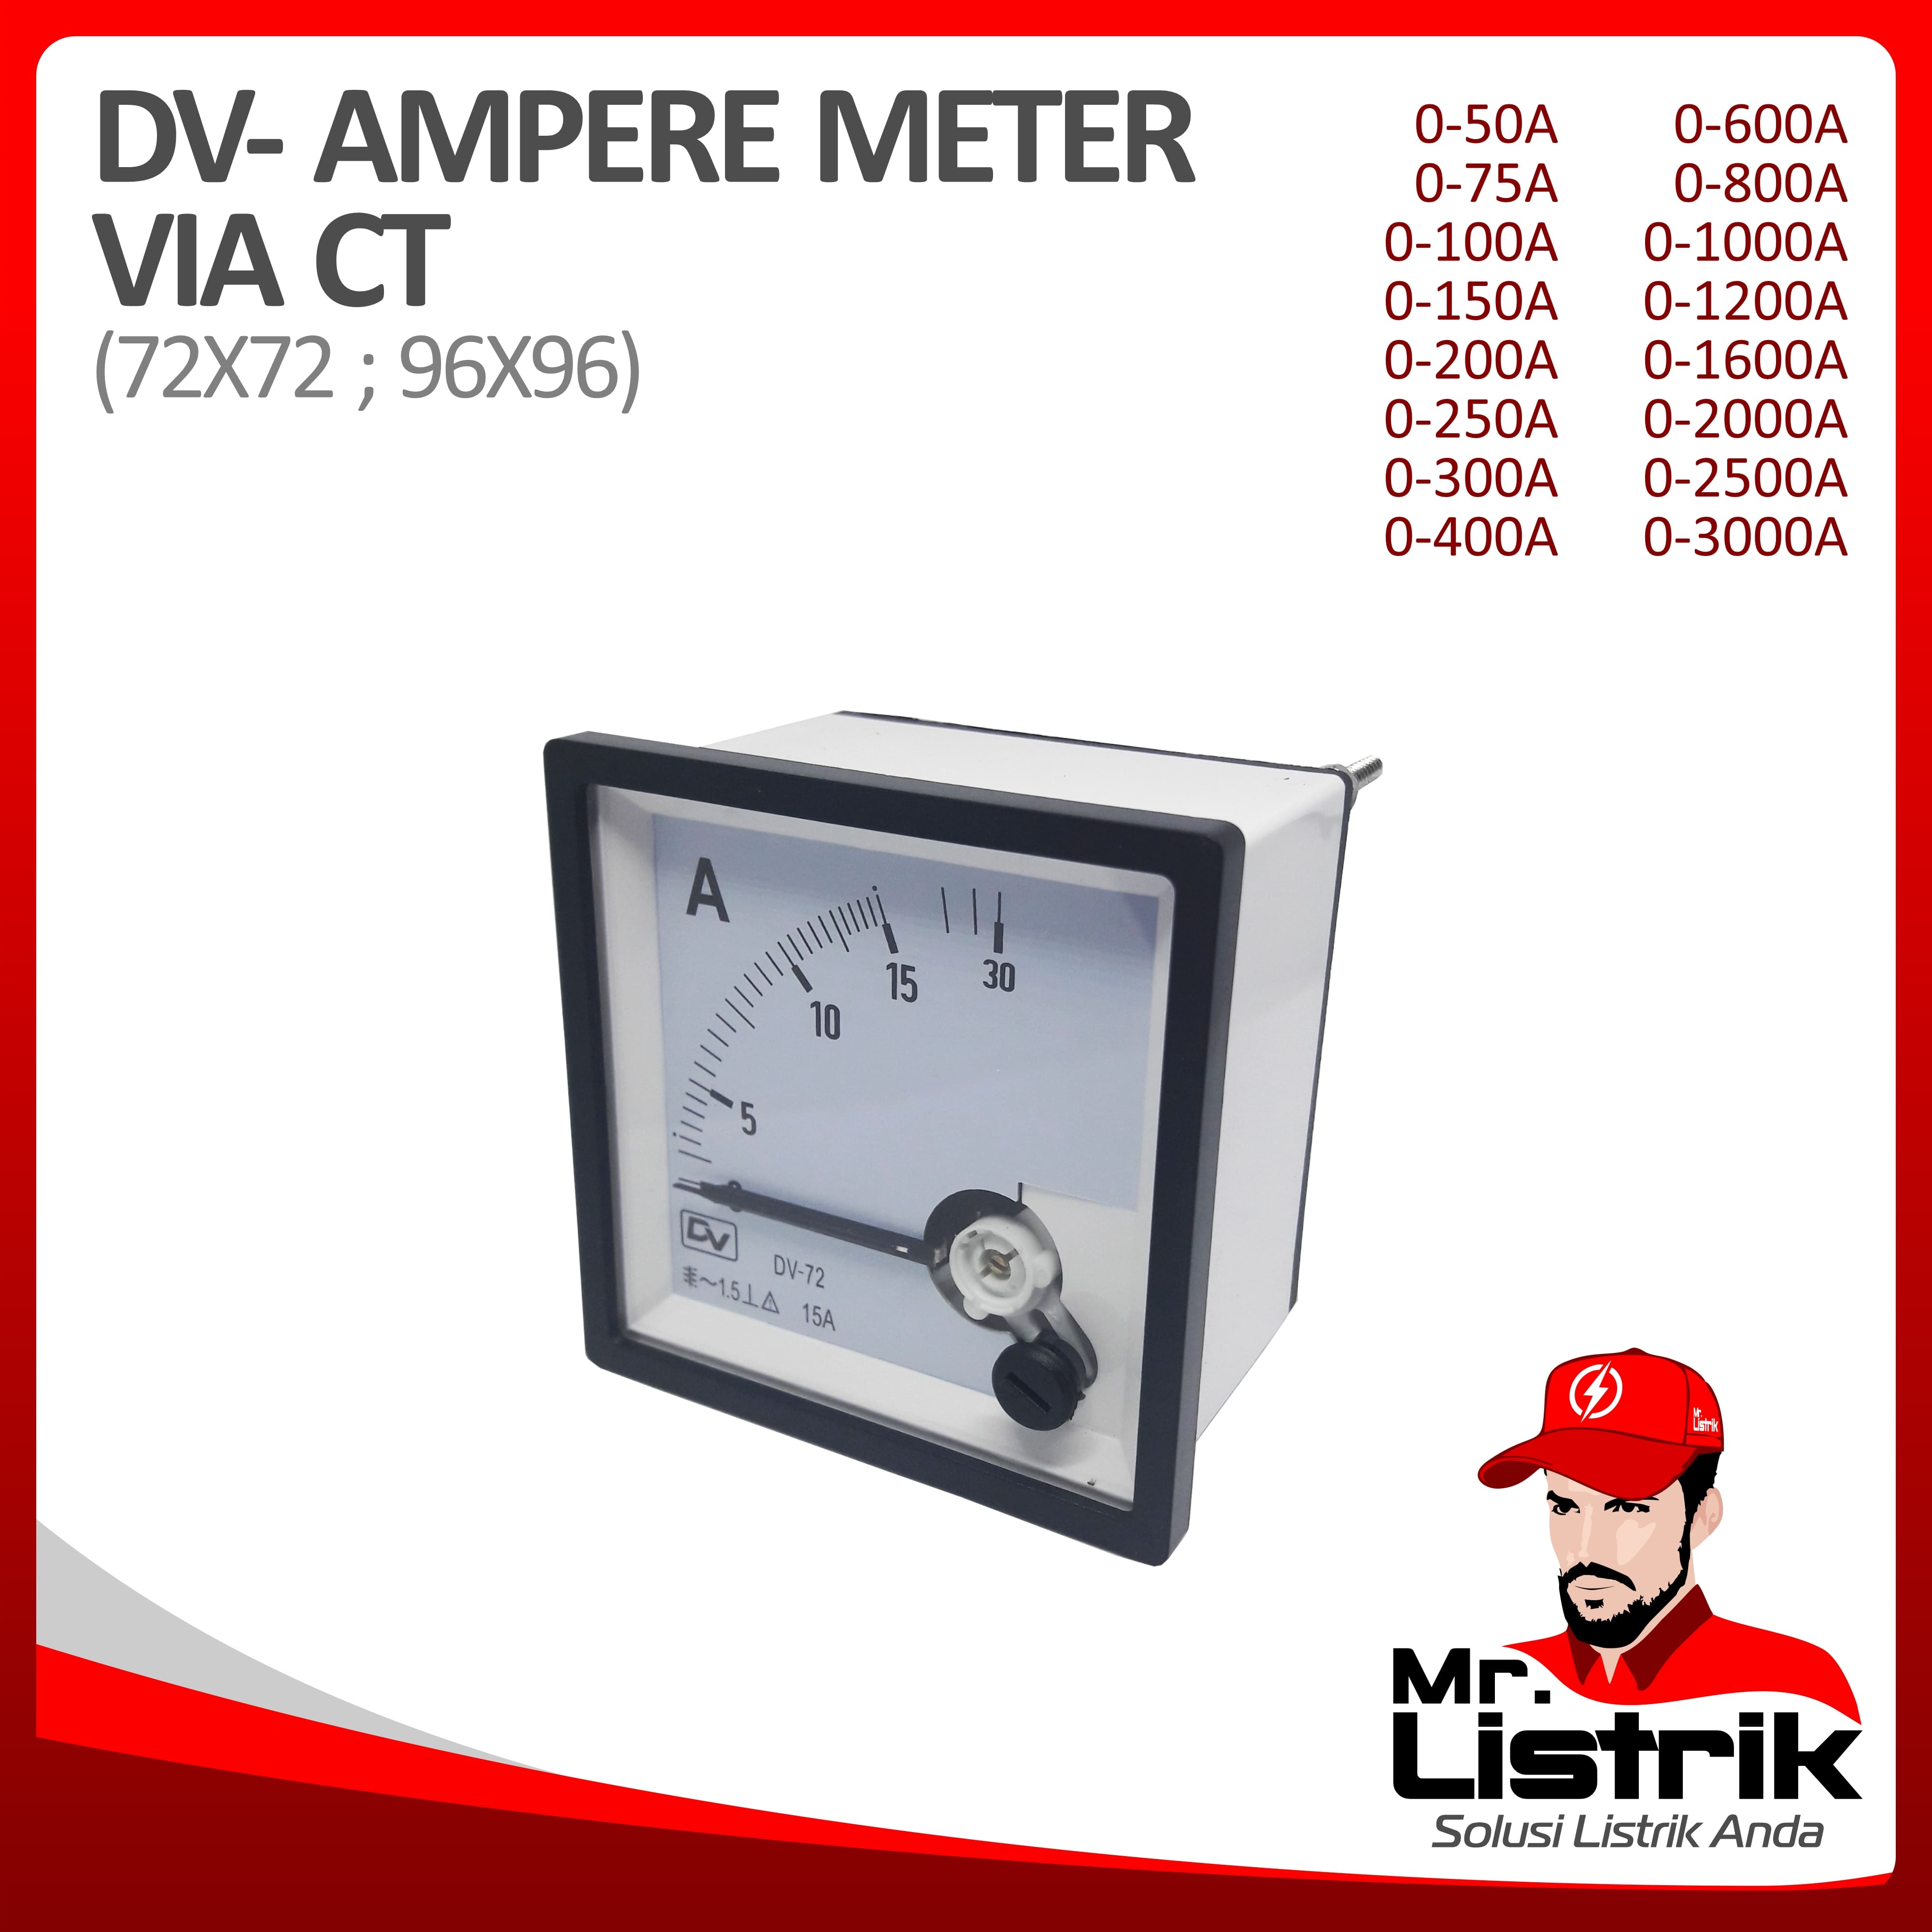 Amperemeter Via CT DV 96x96 - 150A